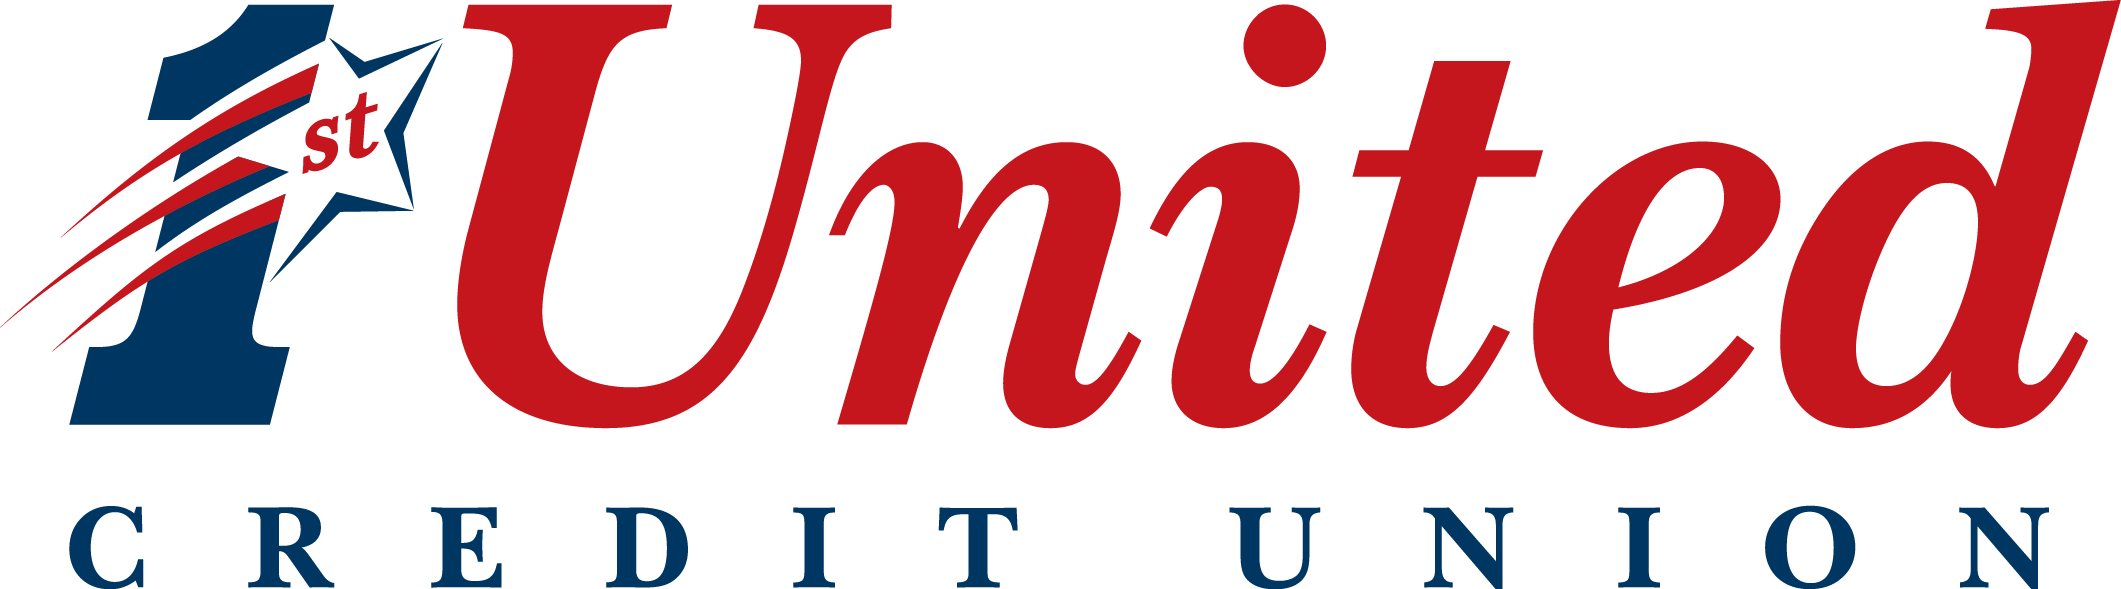 1st United Credit Union Company Logo